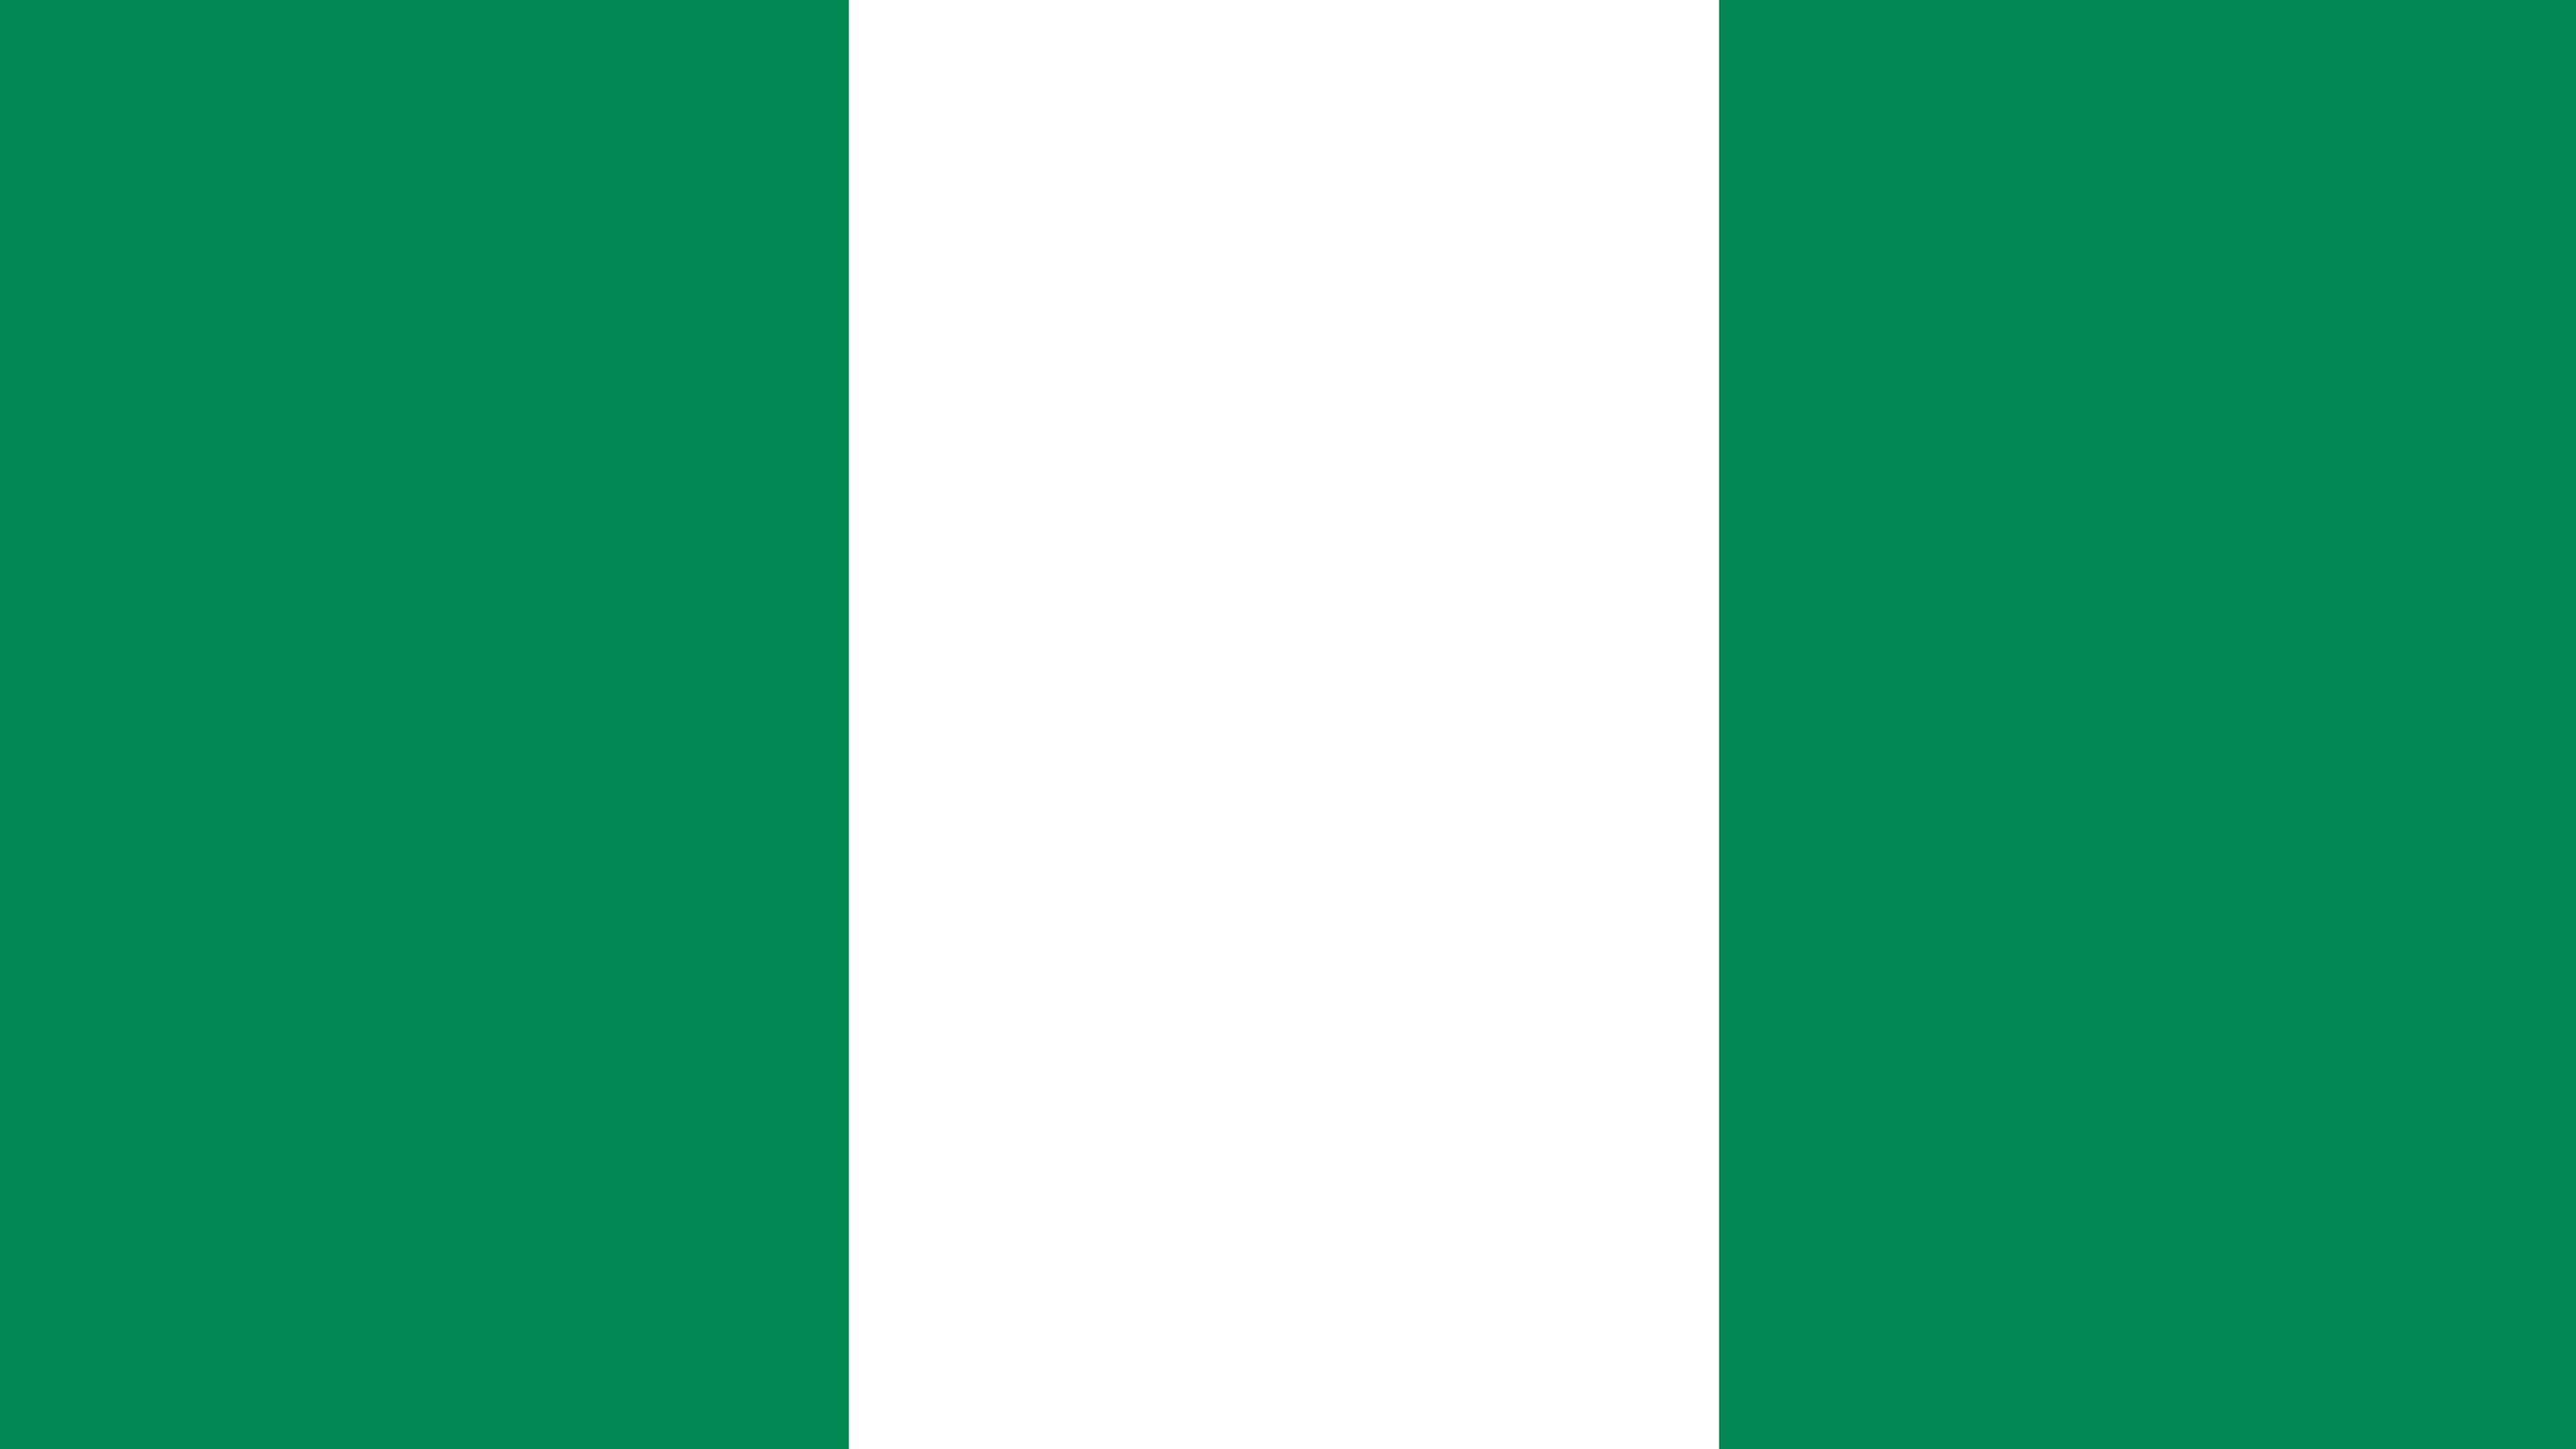 Nigeria Flag UHD 4k Wallpaper